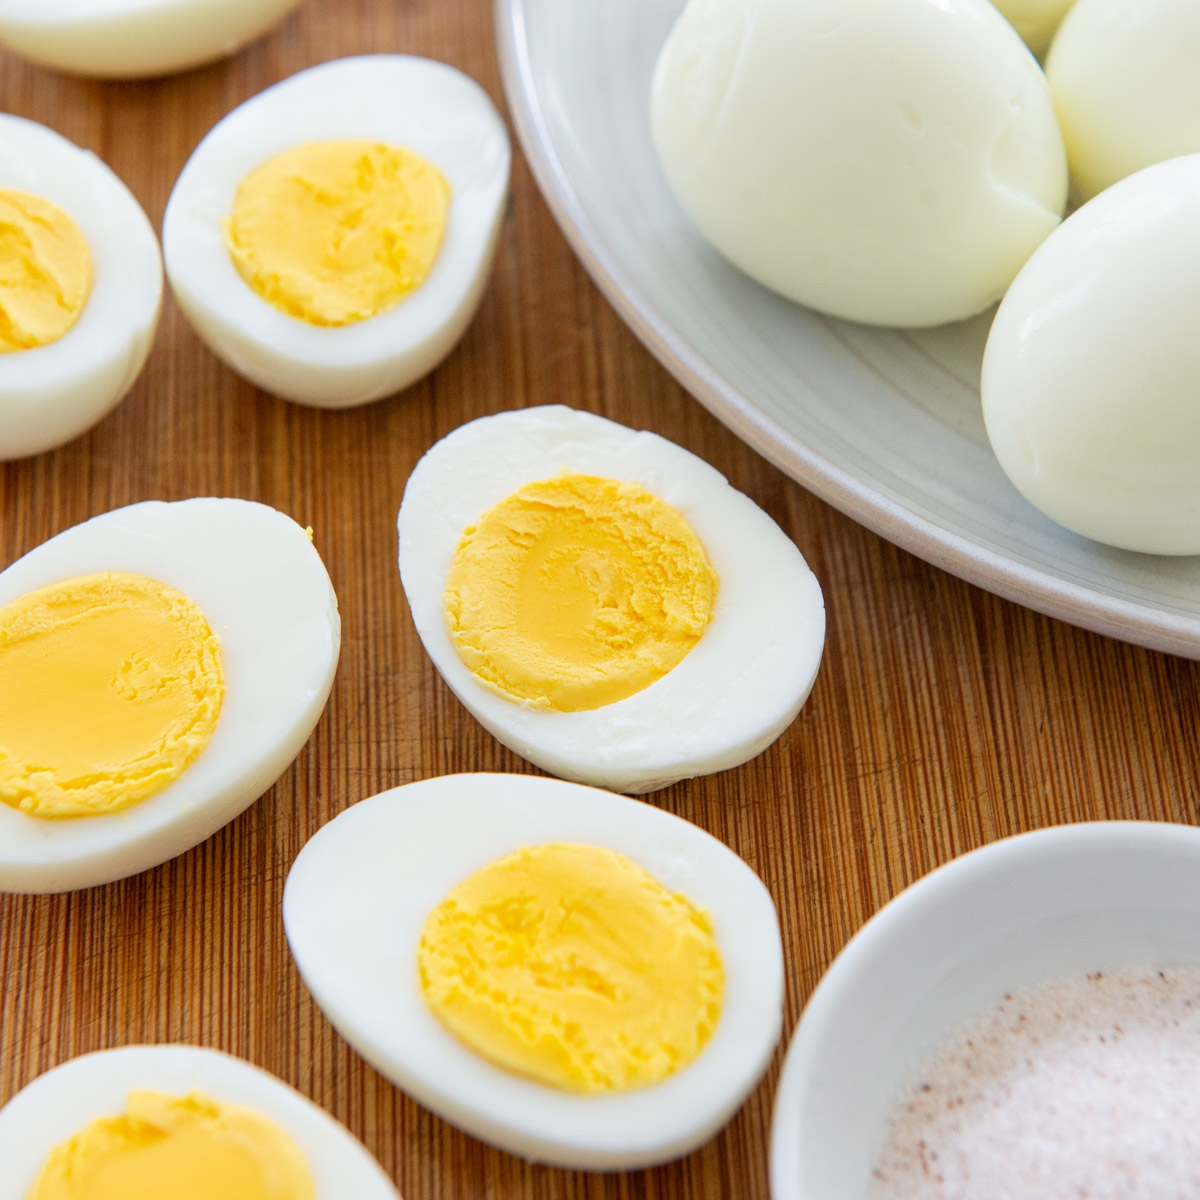 https://www.fifteenspatulas.com/wp-content/uploads/2021/02/Hard-Boiled-Eggs-3-1.jpg